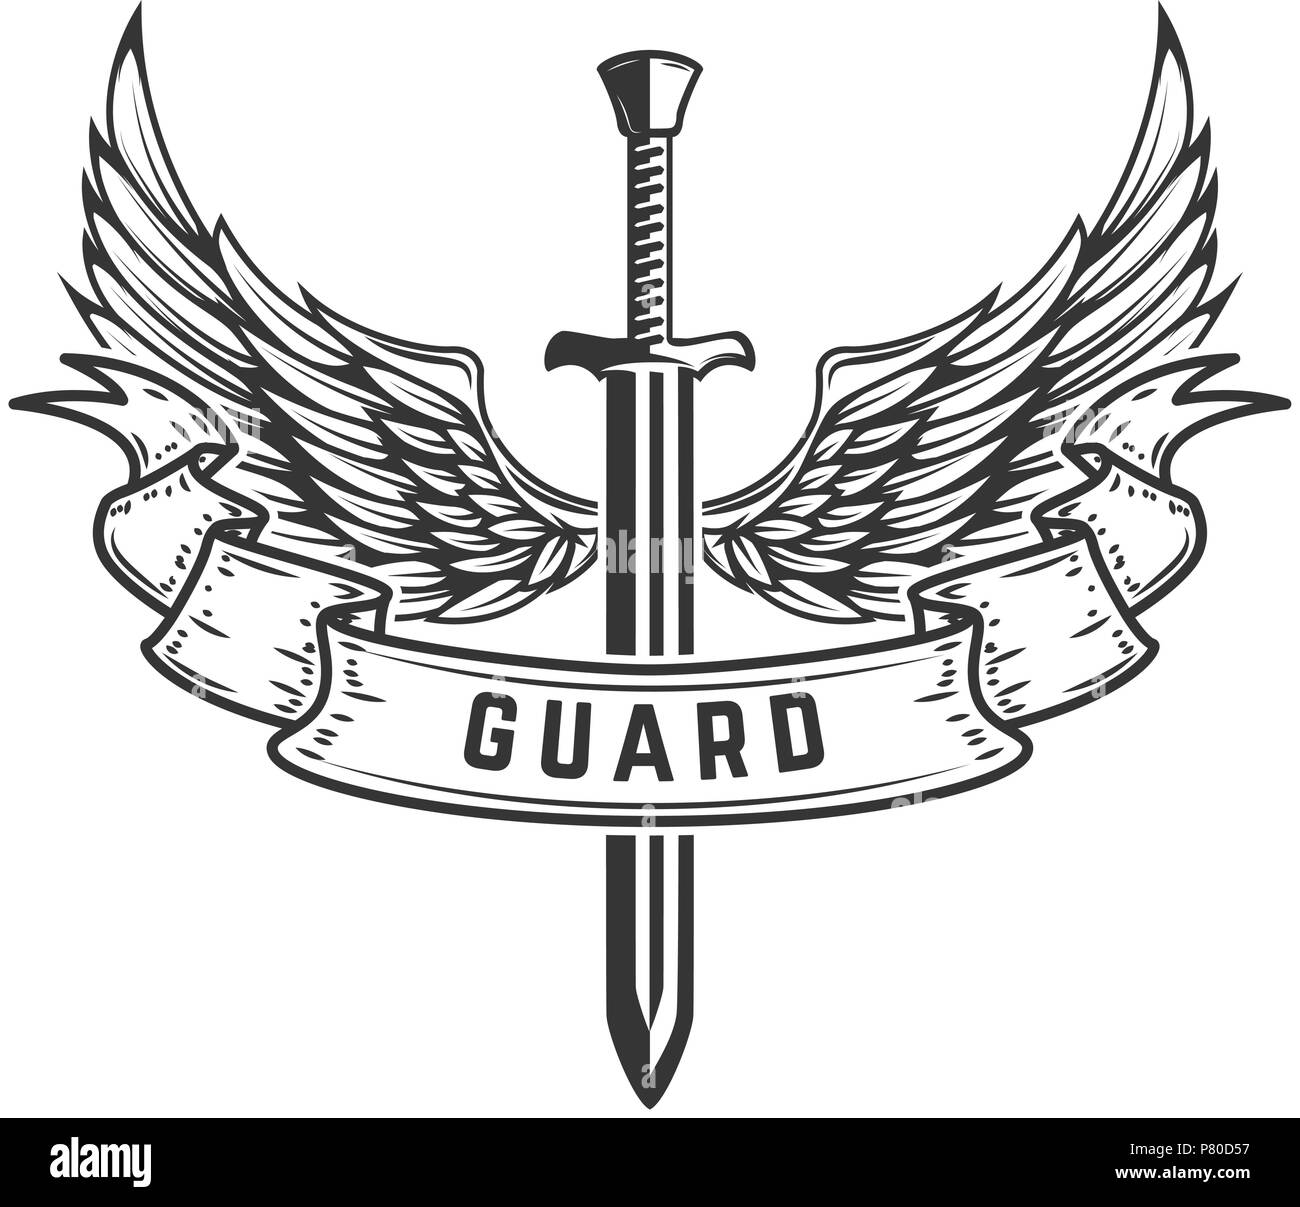 winged sword logo